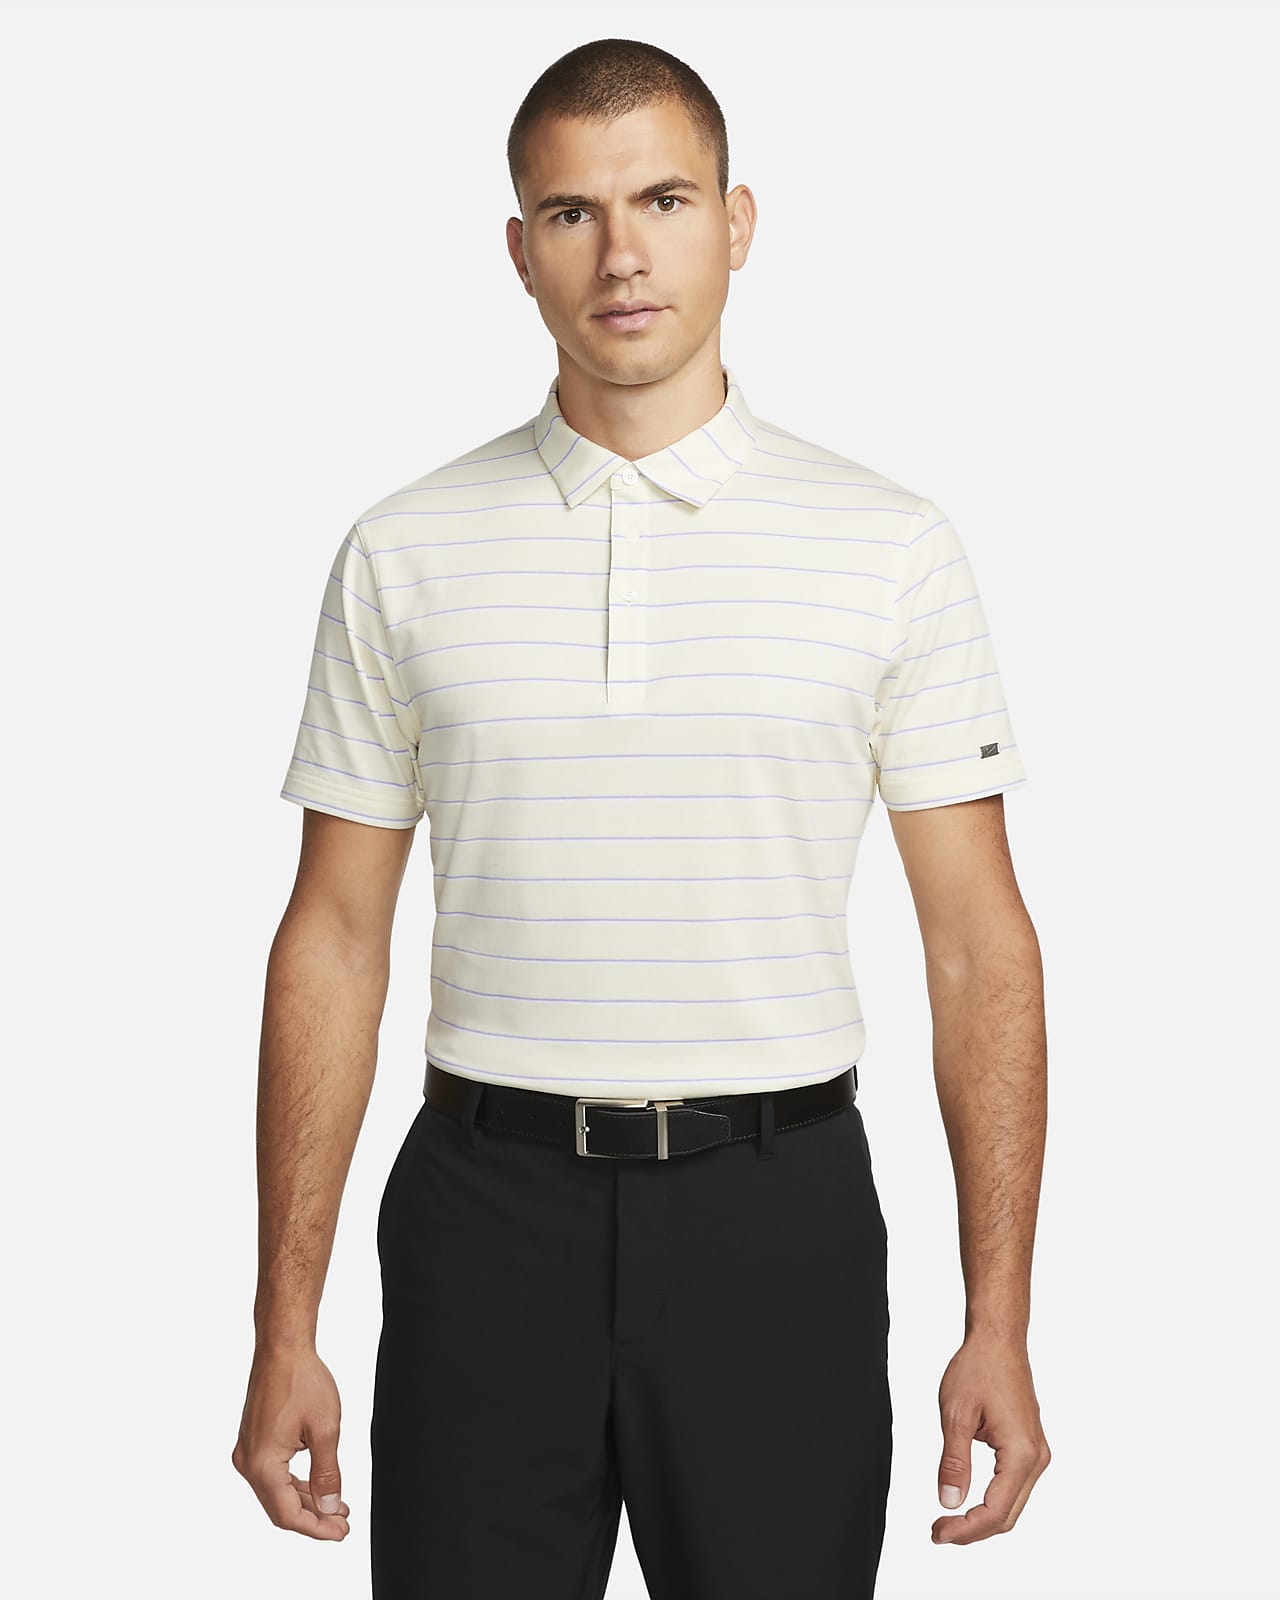 Nike Dri-FIT Player gestreiftes Herren-Golf-Poloshirt